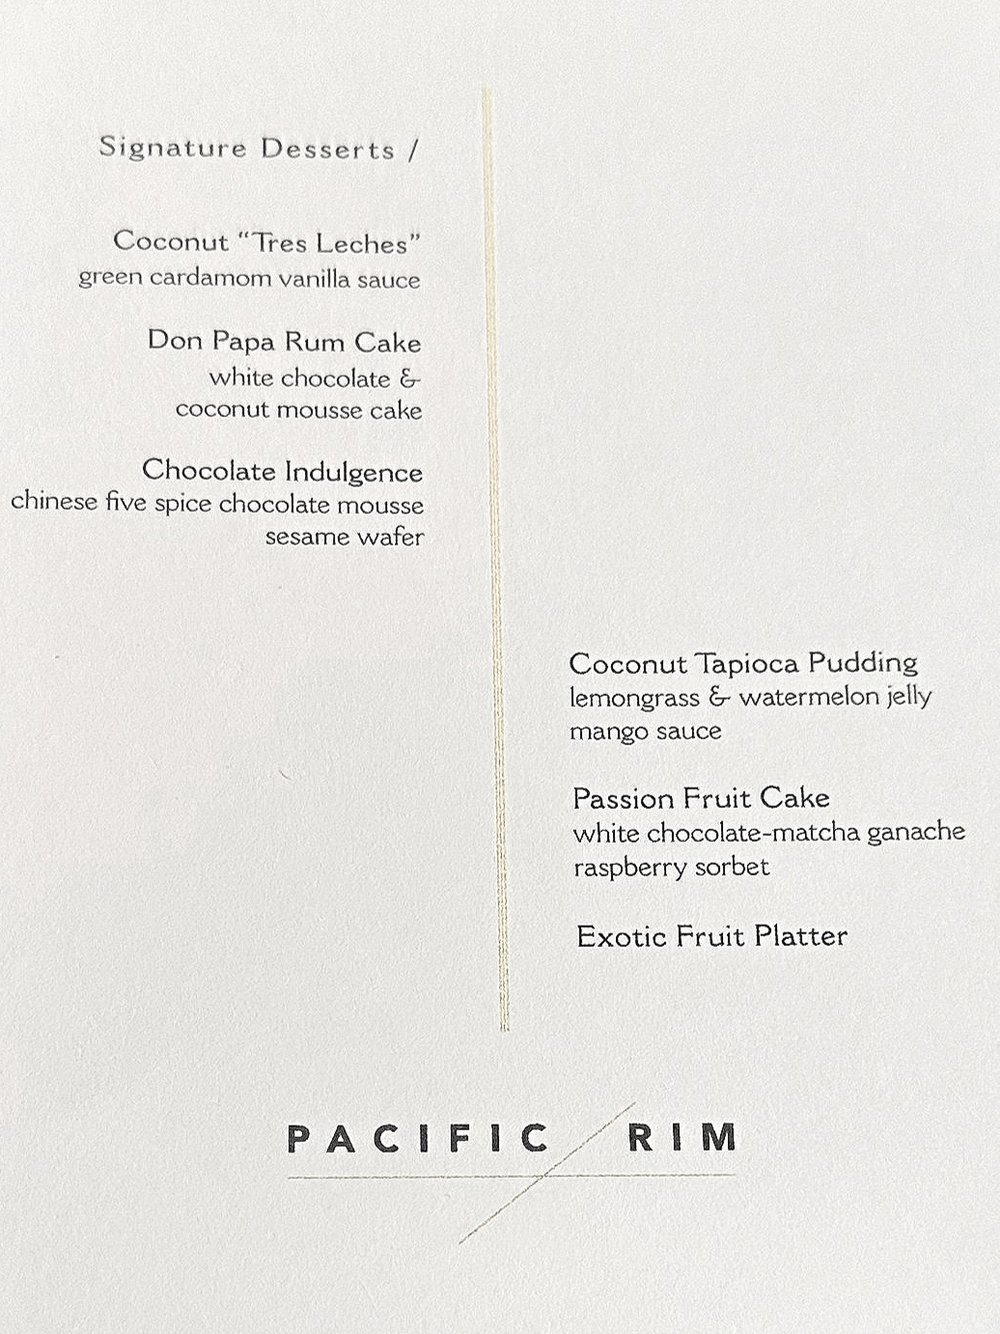 Pacific Rim desserts 